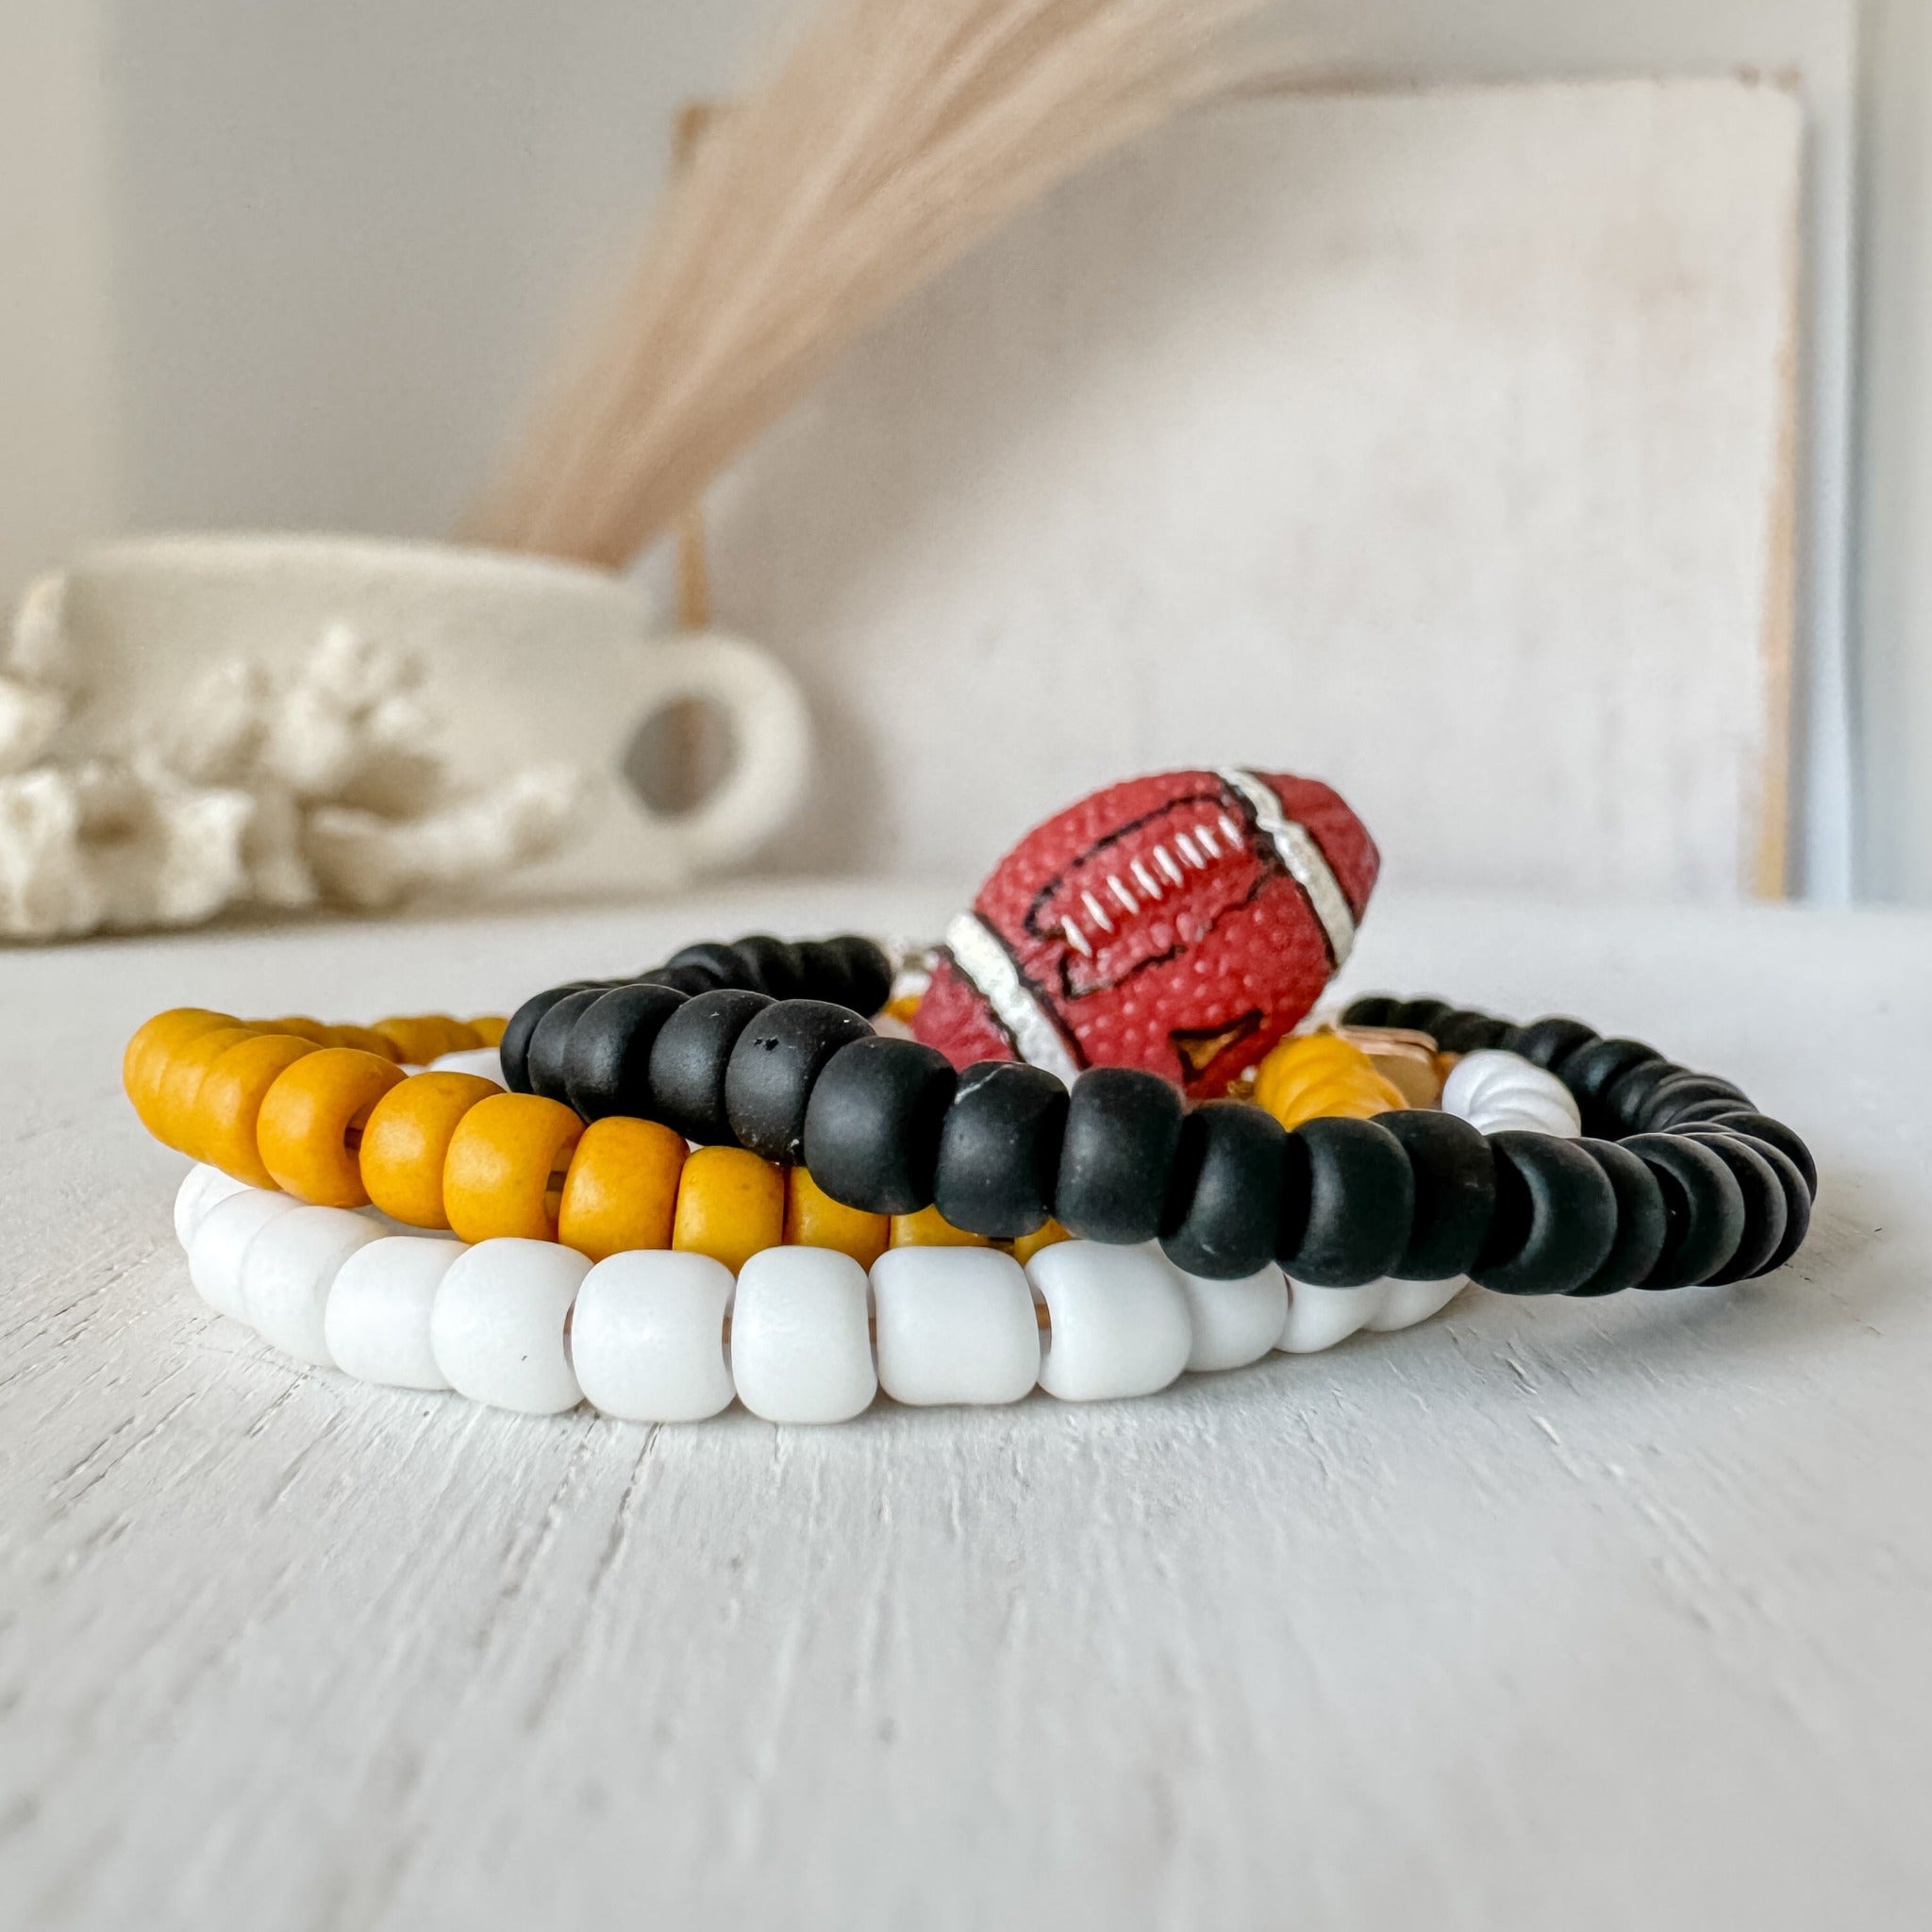 Football Team Colors Bead Bracelet Sets - Set of 2